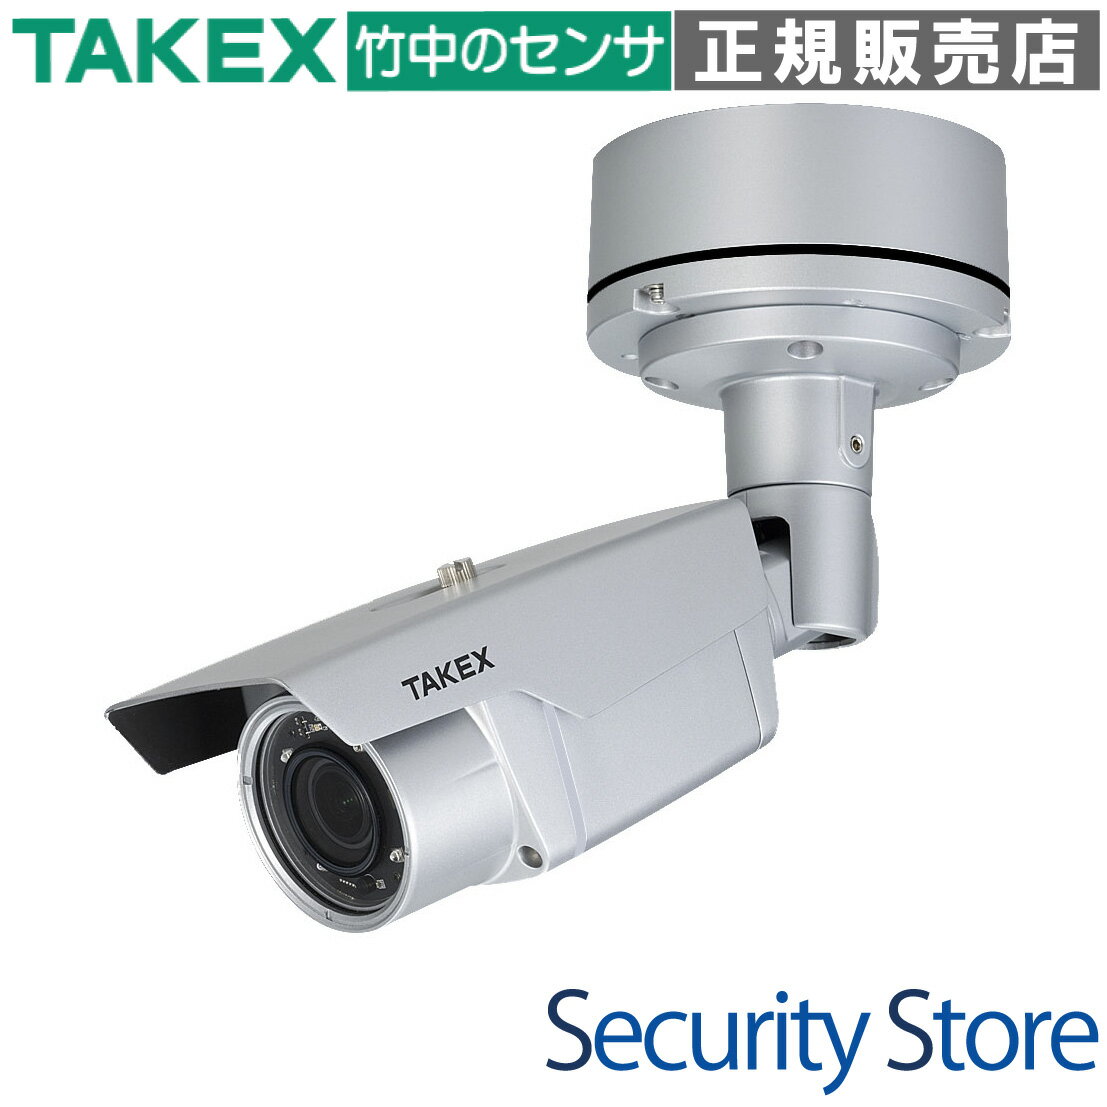 【VHC-D950L】 屋外用ダミーカメラ TAKE